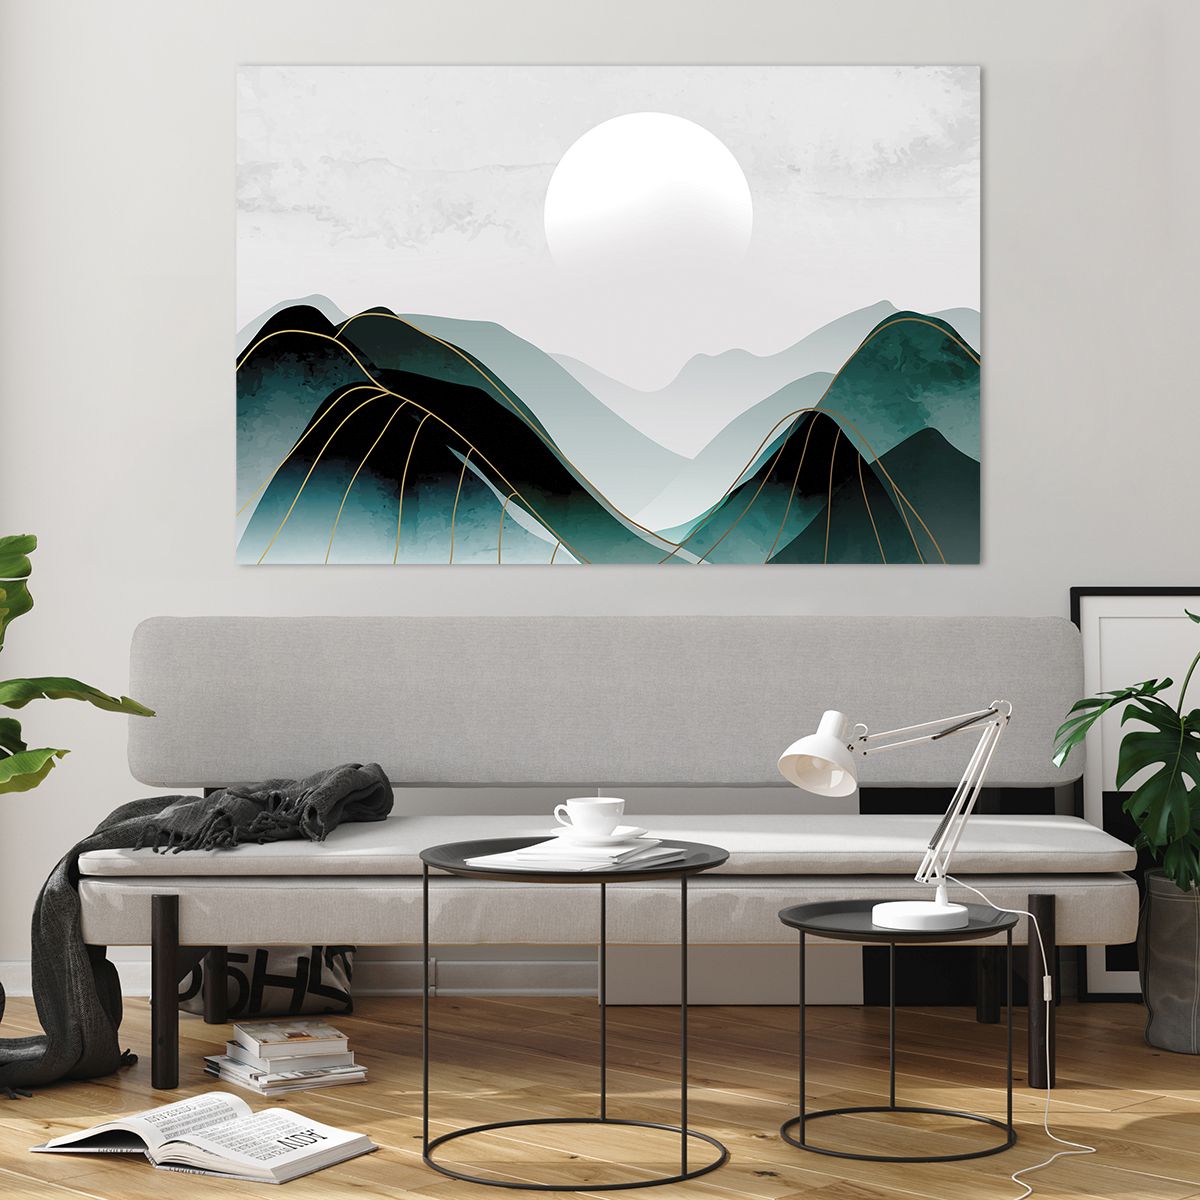 Bild på glas Abstraktion, Bild på glas Landskap, Bild på glas Konst, Bild på glas Måne, Bild på glas Berg